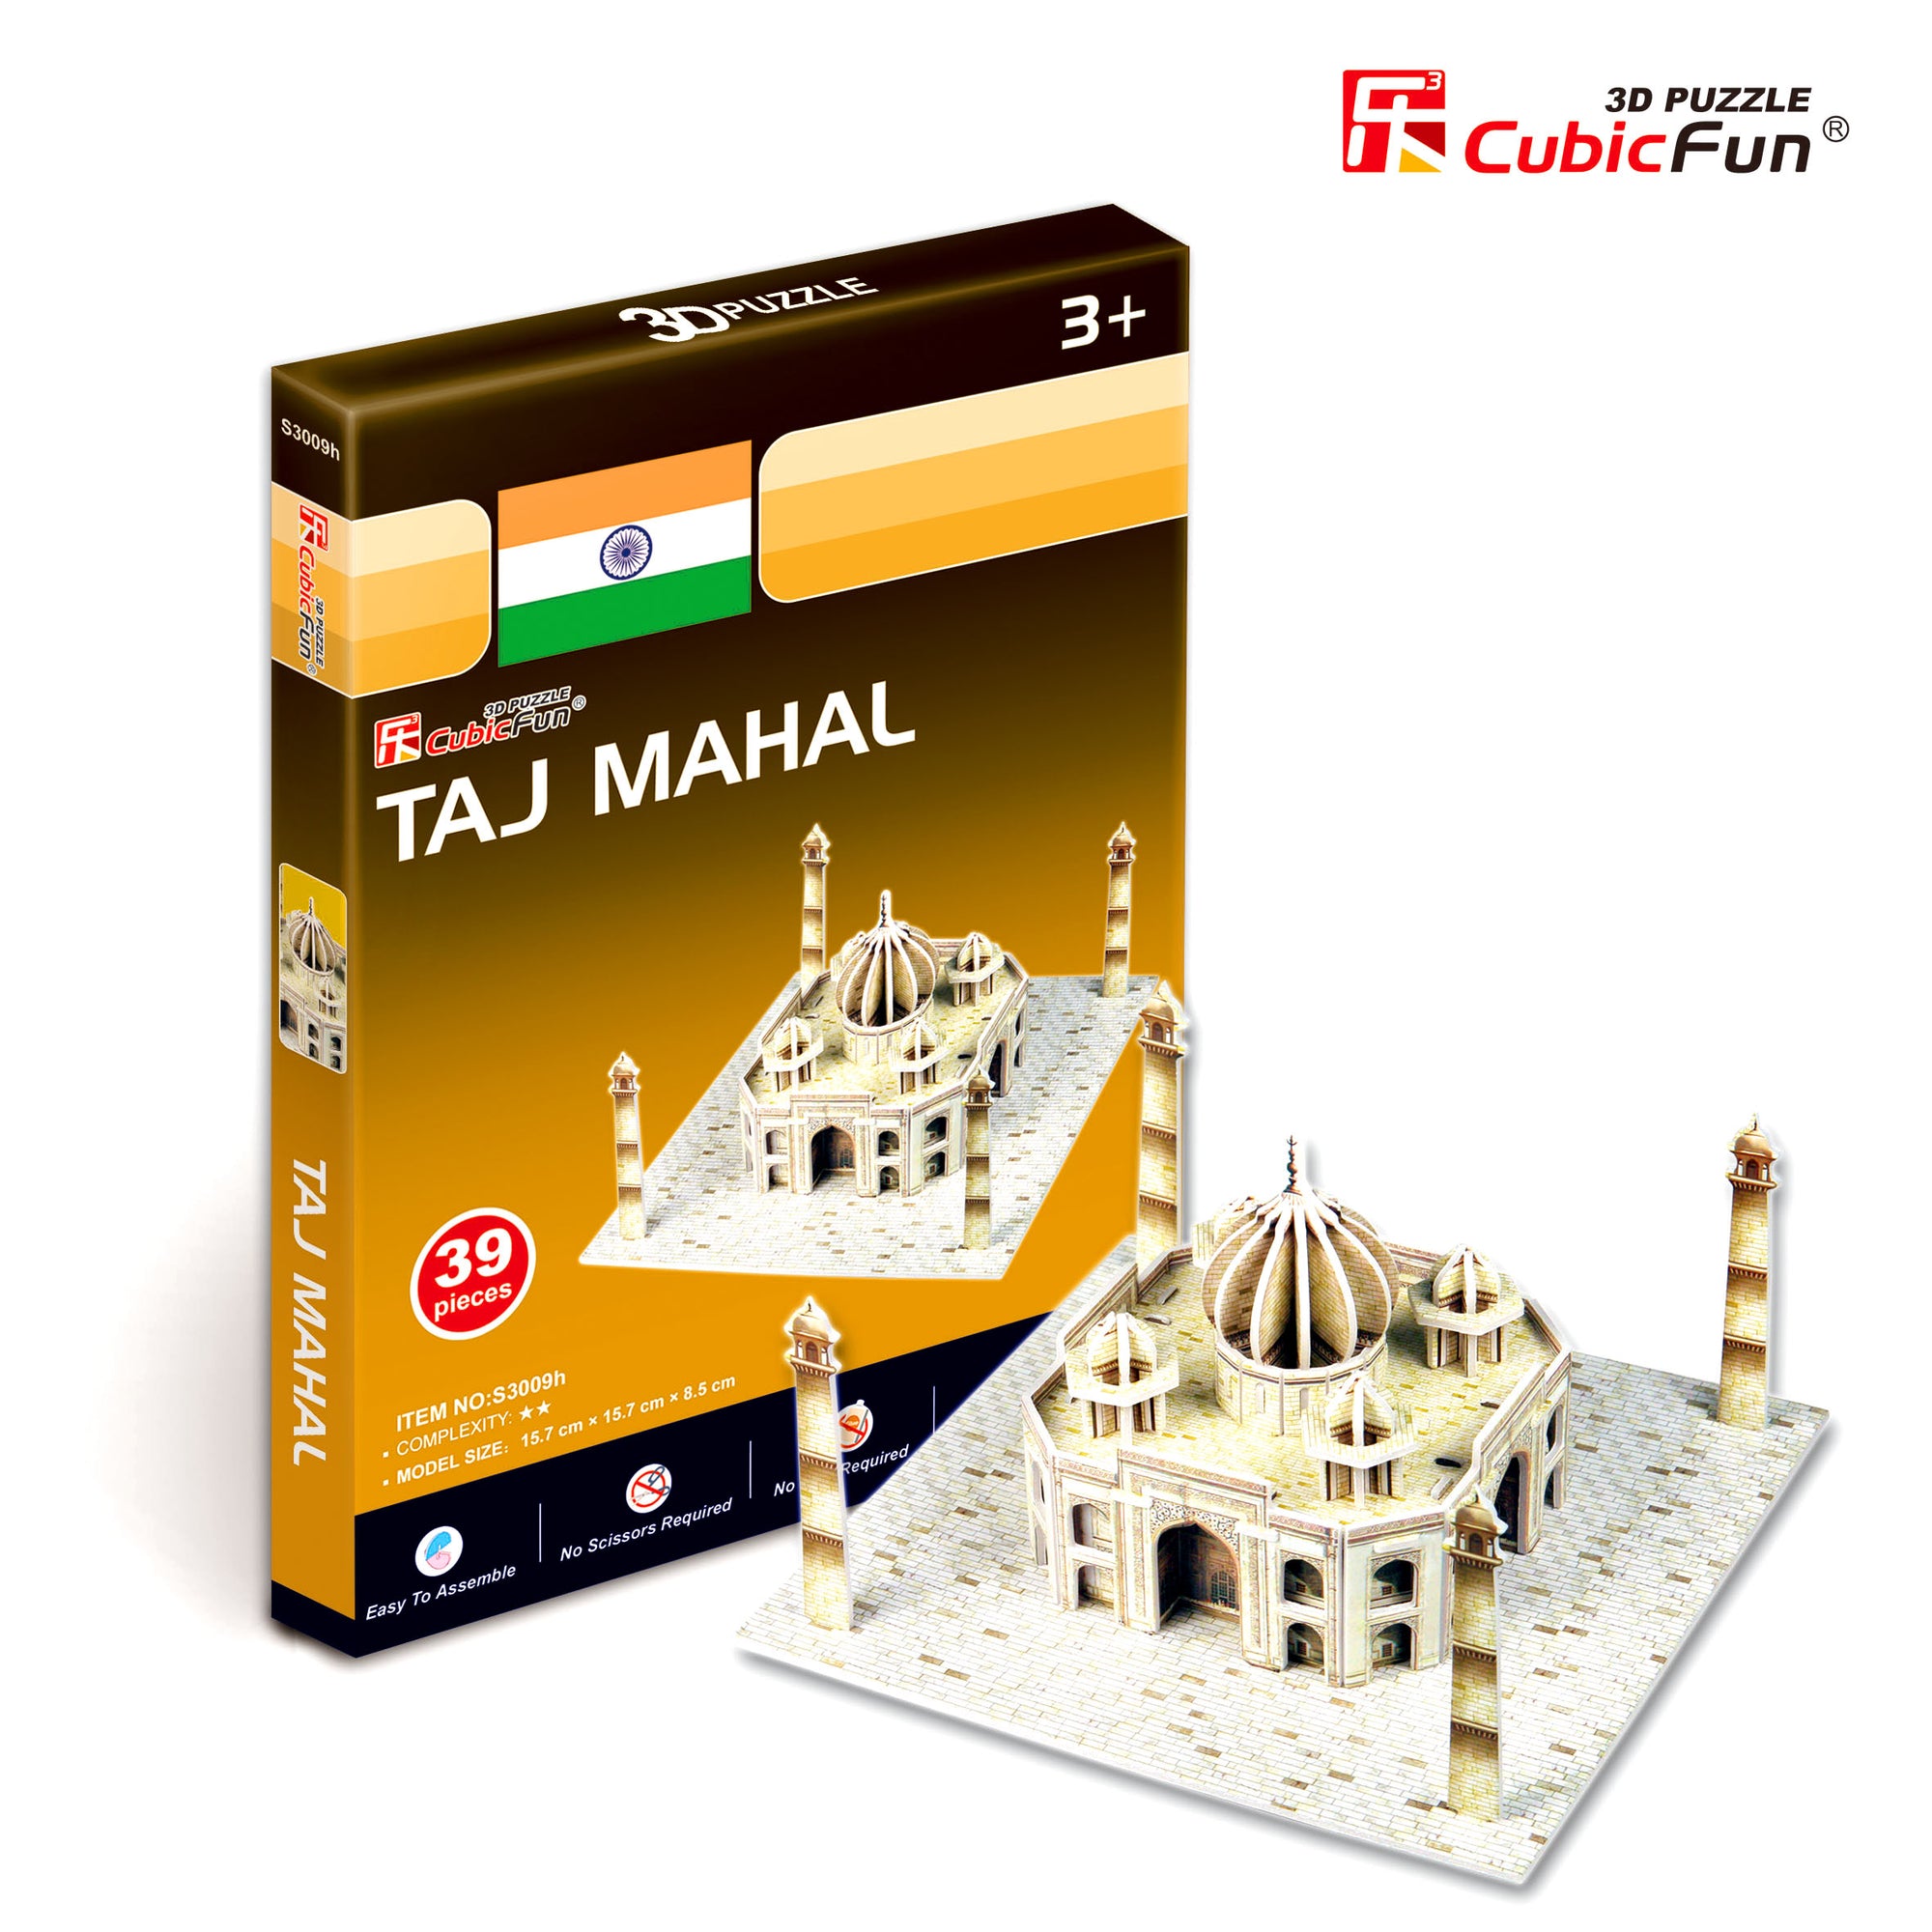 Taj Mahal, 39pc 3D Puzzle